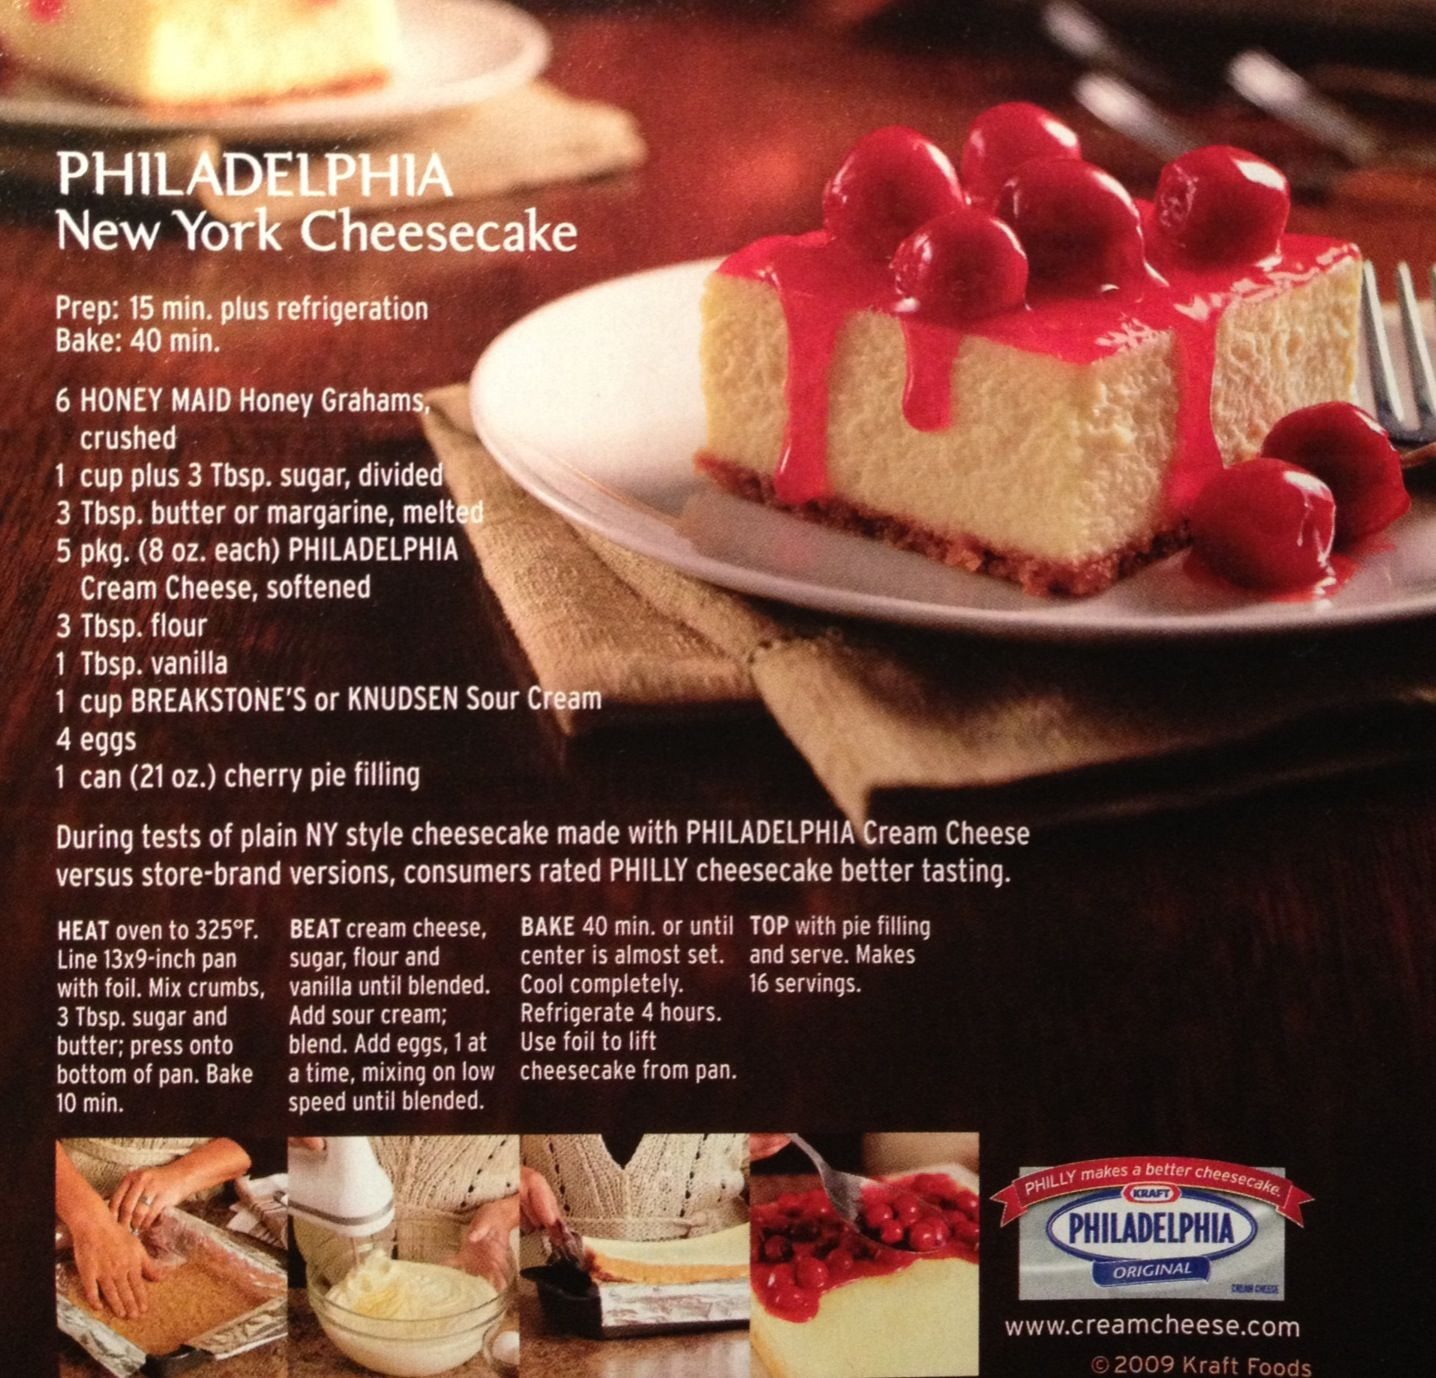 Original Philadelphia Cheesecake Recipe
 Original philly cream cheese cheesecake recipe